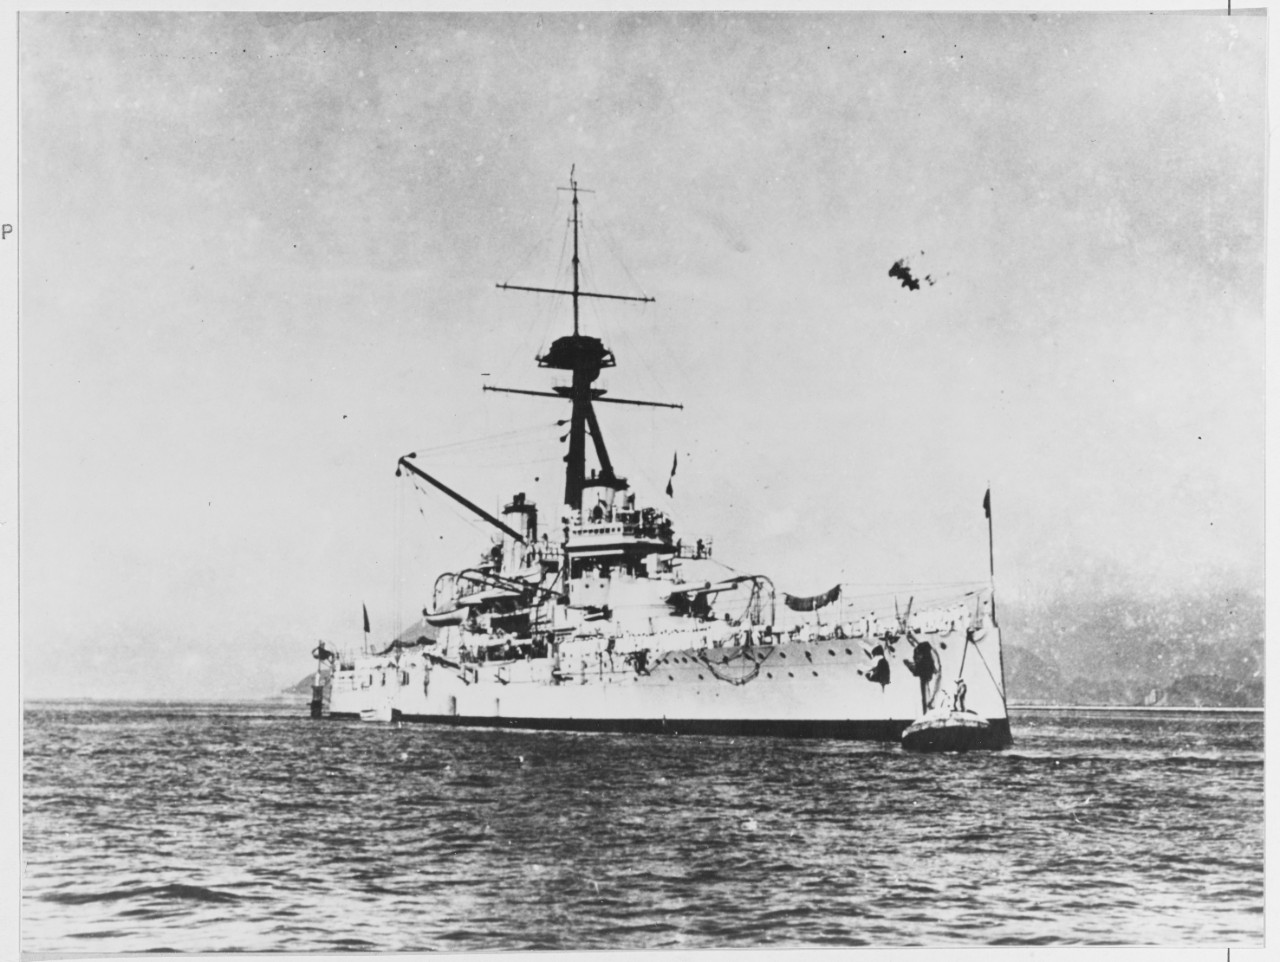 SAO PAULO (Brazilian Battleship, 1909).